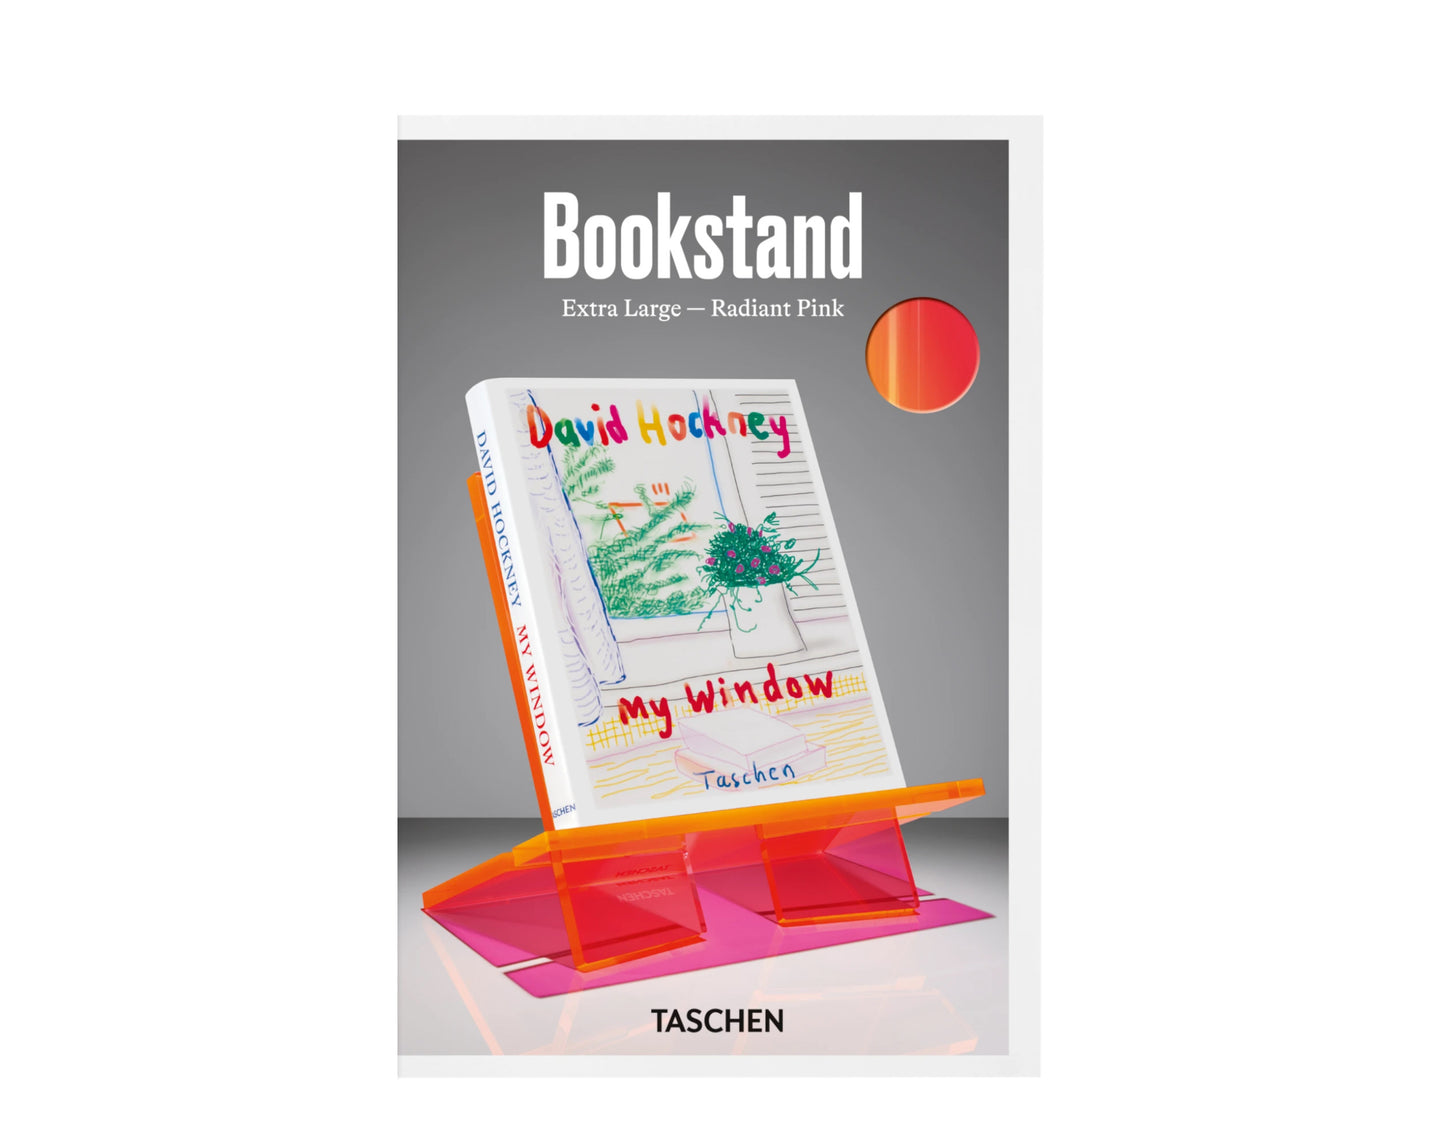 Taschen Books - Bookstand. Extra-Large. Radiant Pink - Display Holder